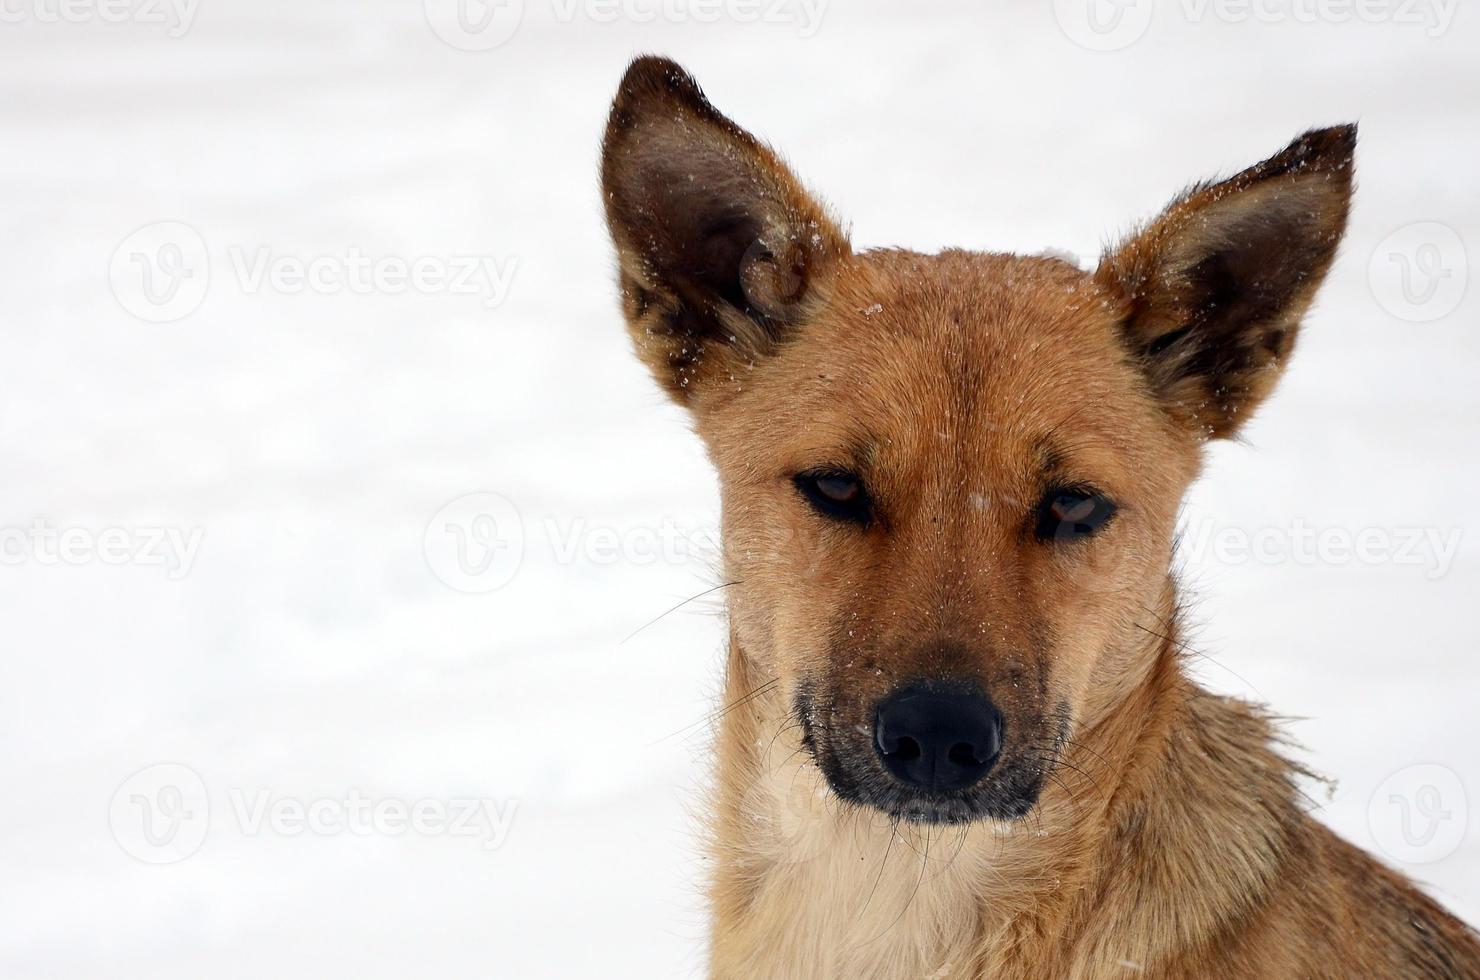 A stray homeless dog. Portrait of a sad orange dog on a snowy background photo